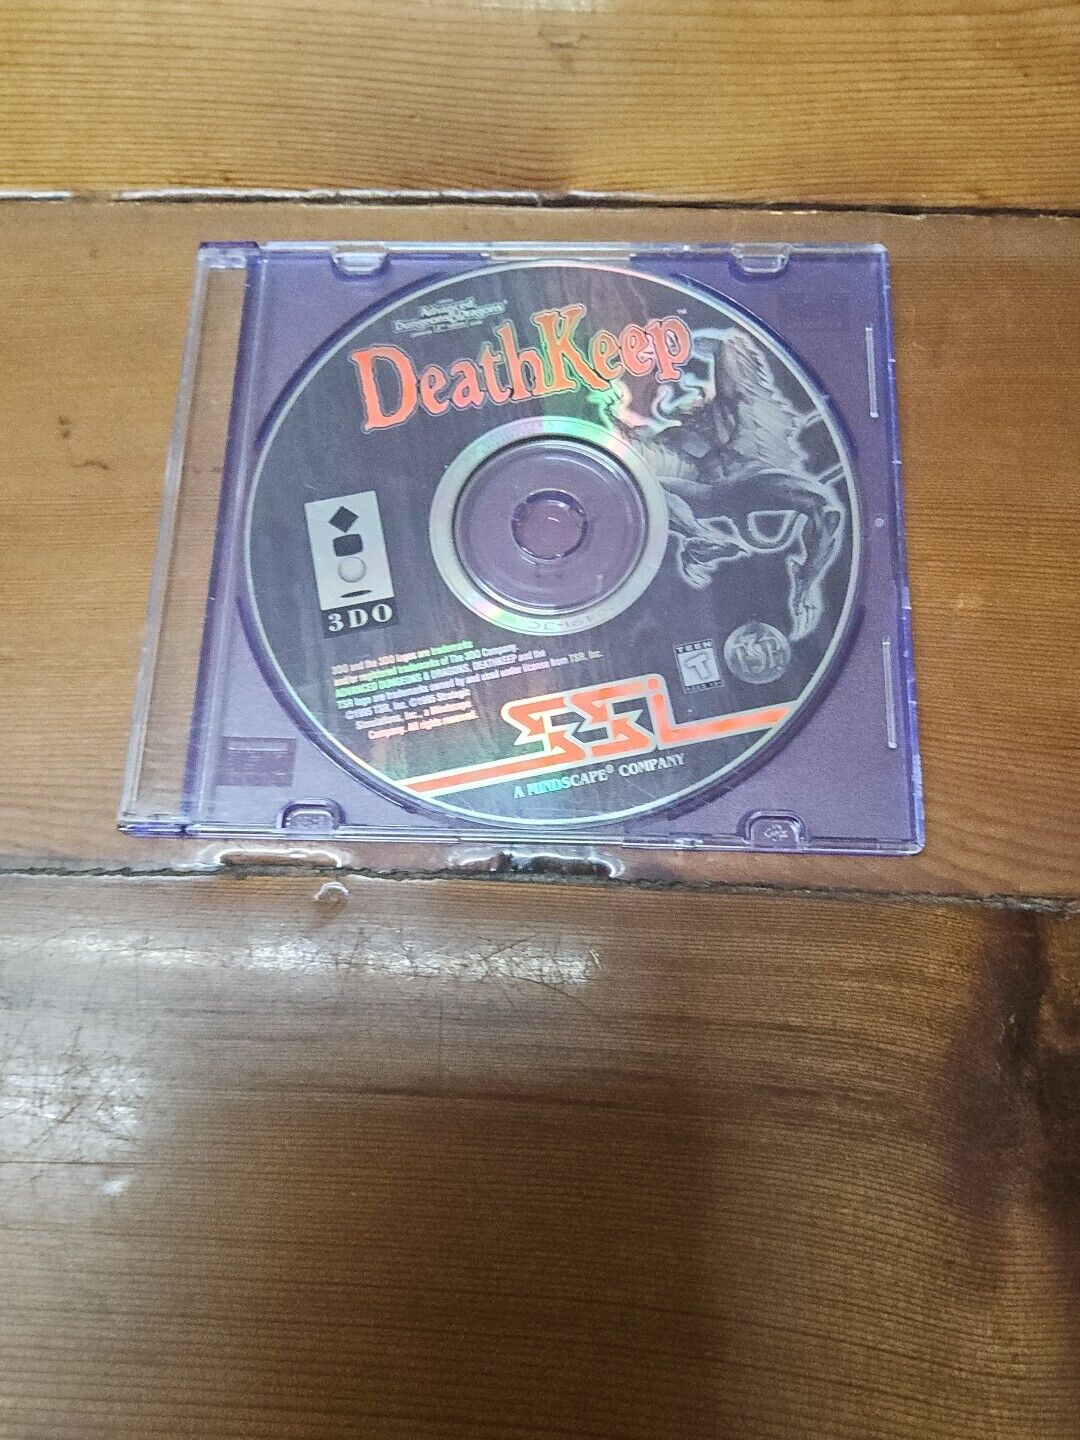 DeathKeep (Panasonic 3DO, 1995) Advanced D&D Game Only